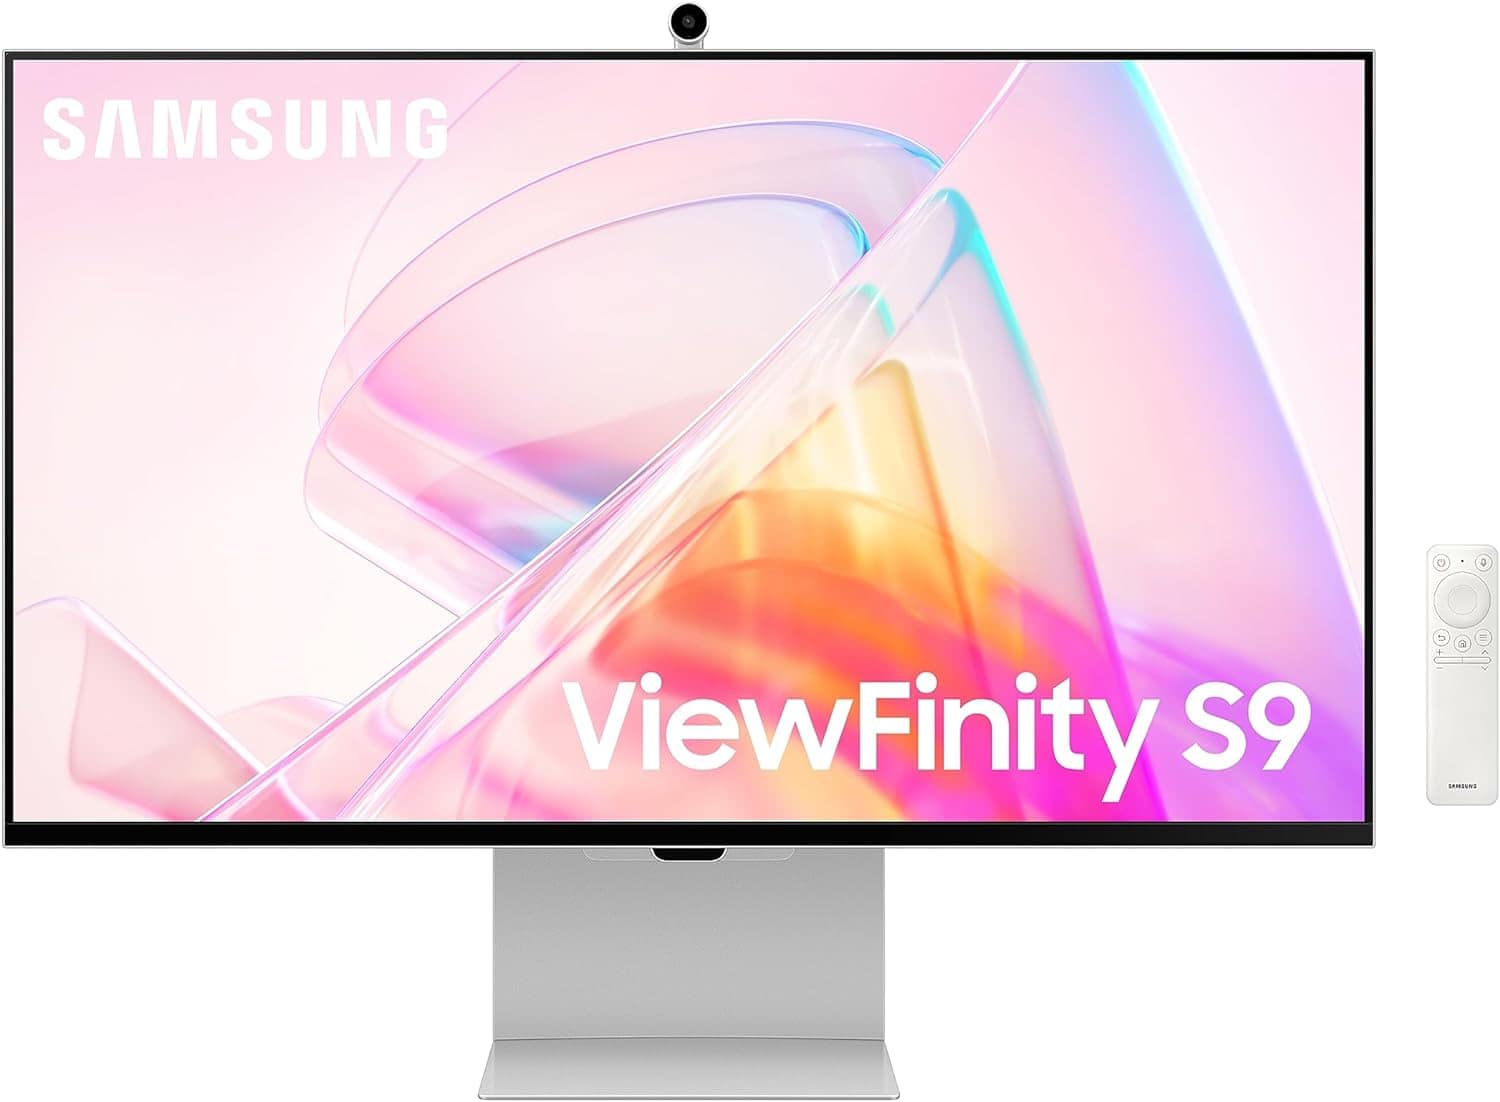 SAMSUNG ViewFinity S9